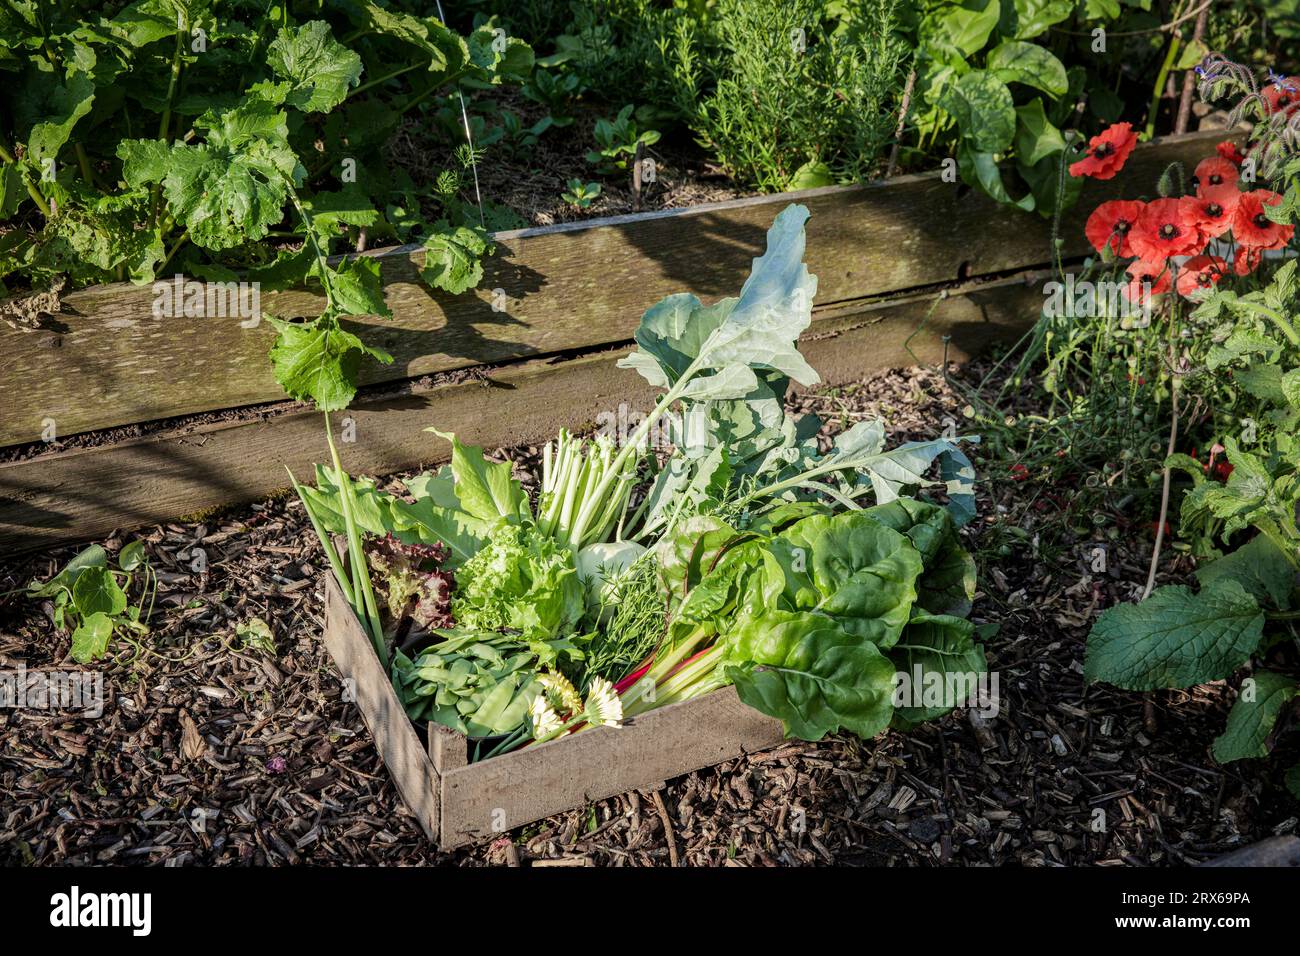 Crate of freshly picked vegetables standing in vegetable garden Stock Photo